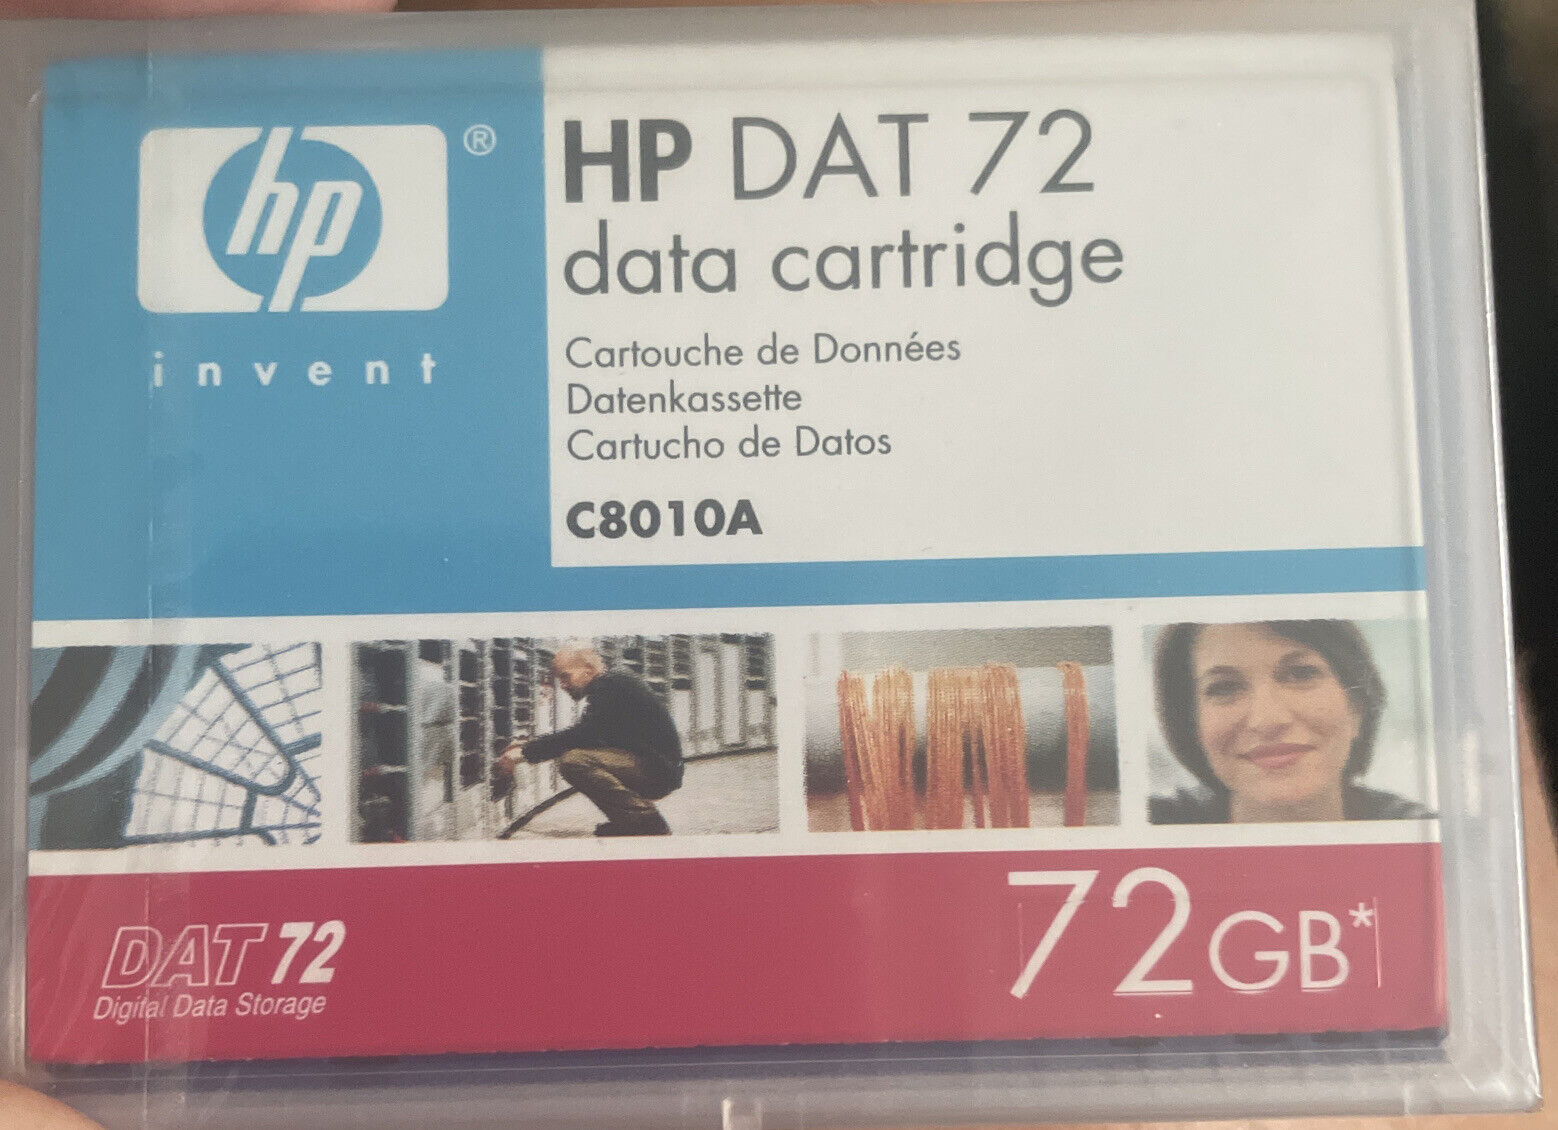 HP DAT 72 Data Cartridge C8010A 72GB New